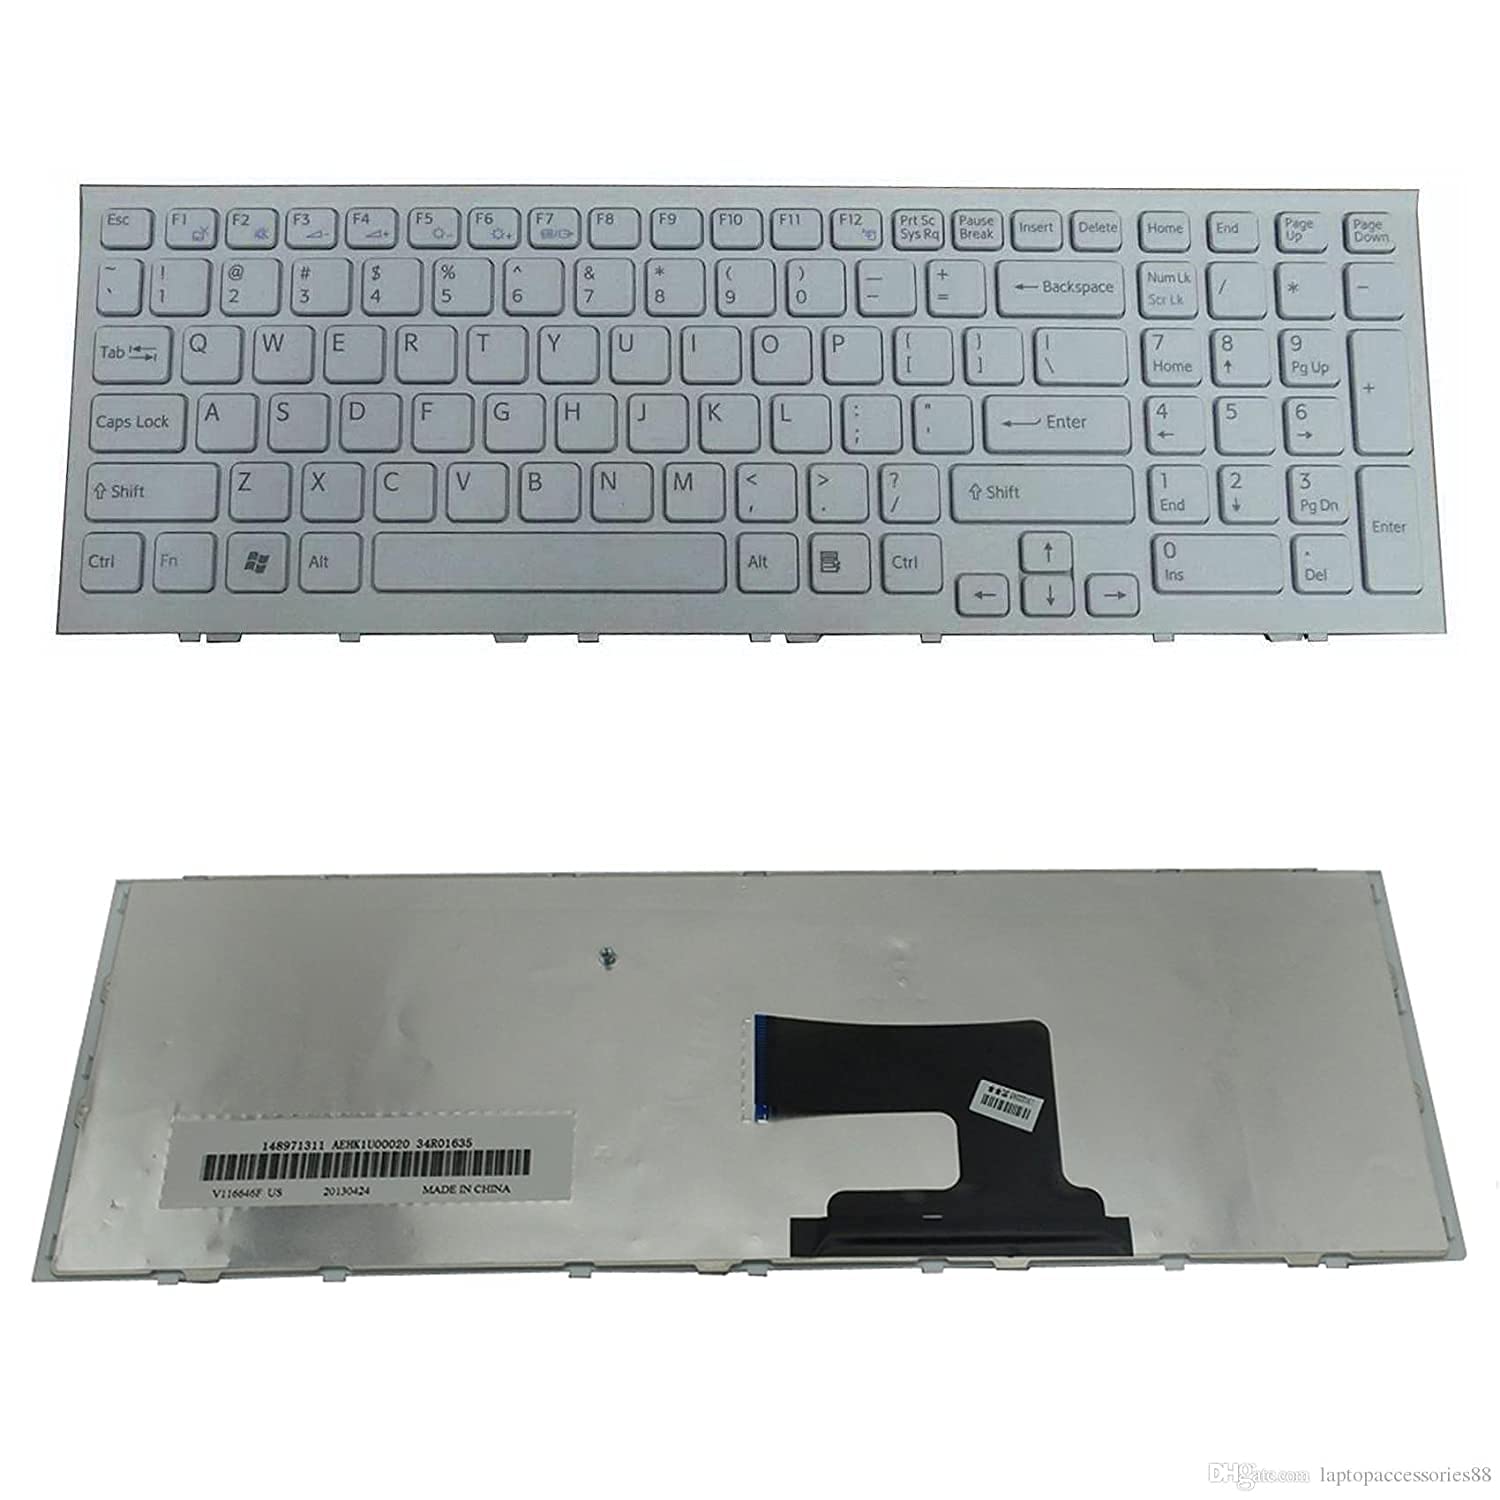 WISTAR Laptop Keyboard Compatible with Sony Vaio VPC-EH VPCEH Series Part No. 148915721, AENE7U00020, 148971311, AEHK1U00120, V116646A, 1-489-708-11, 148970811, 9Z.N5CSQ.201, AEHK1U00110